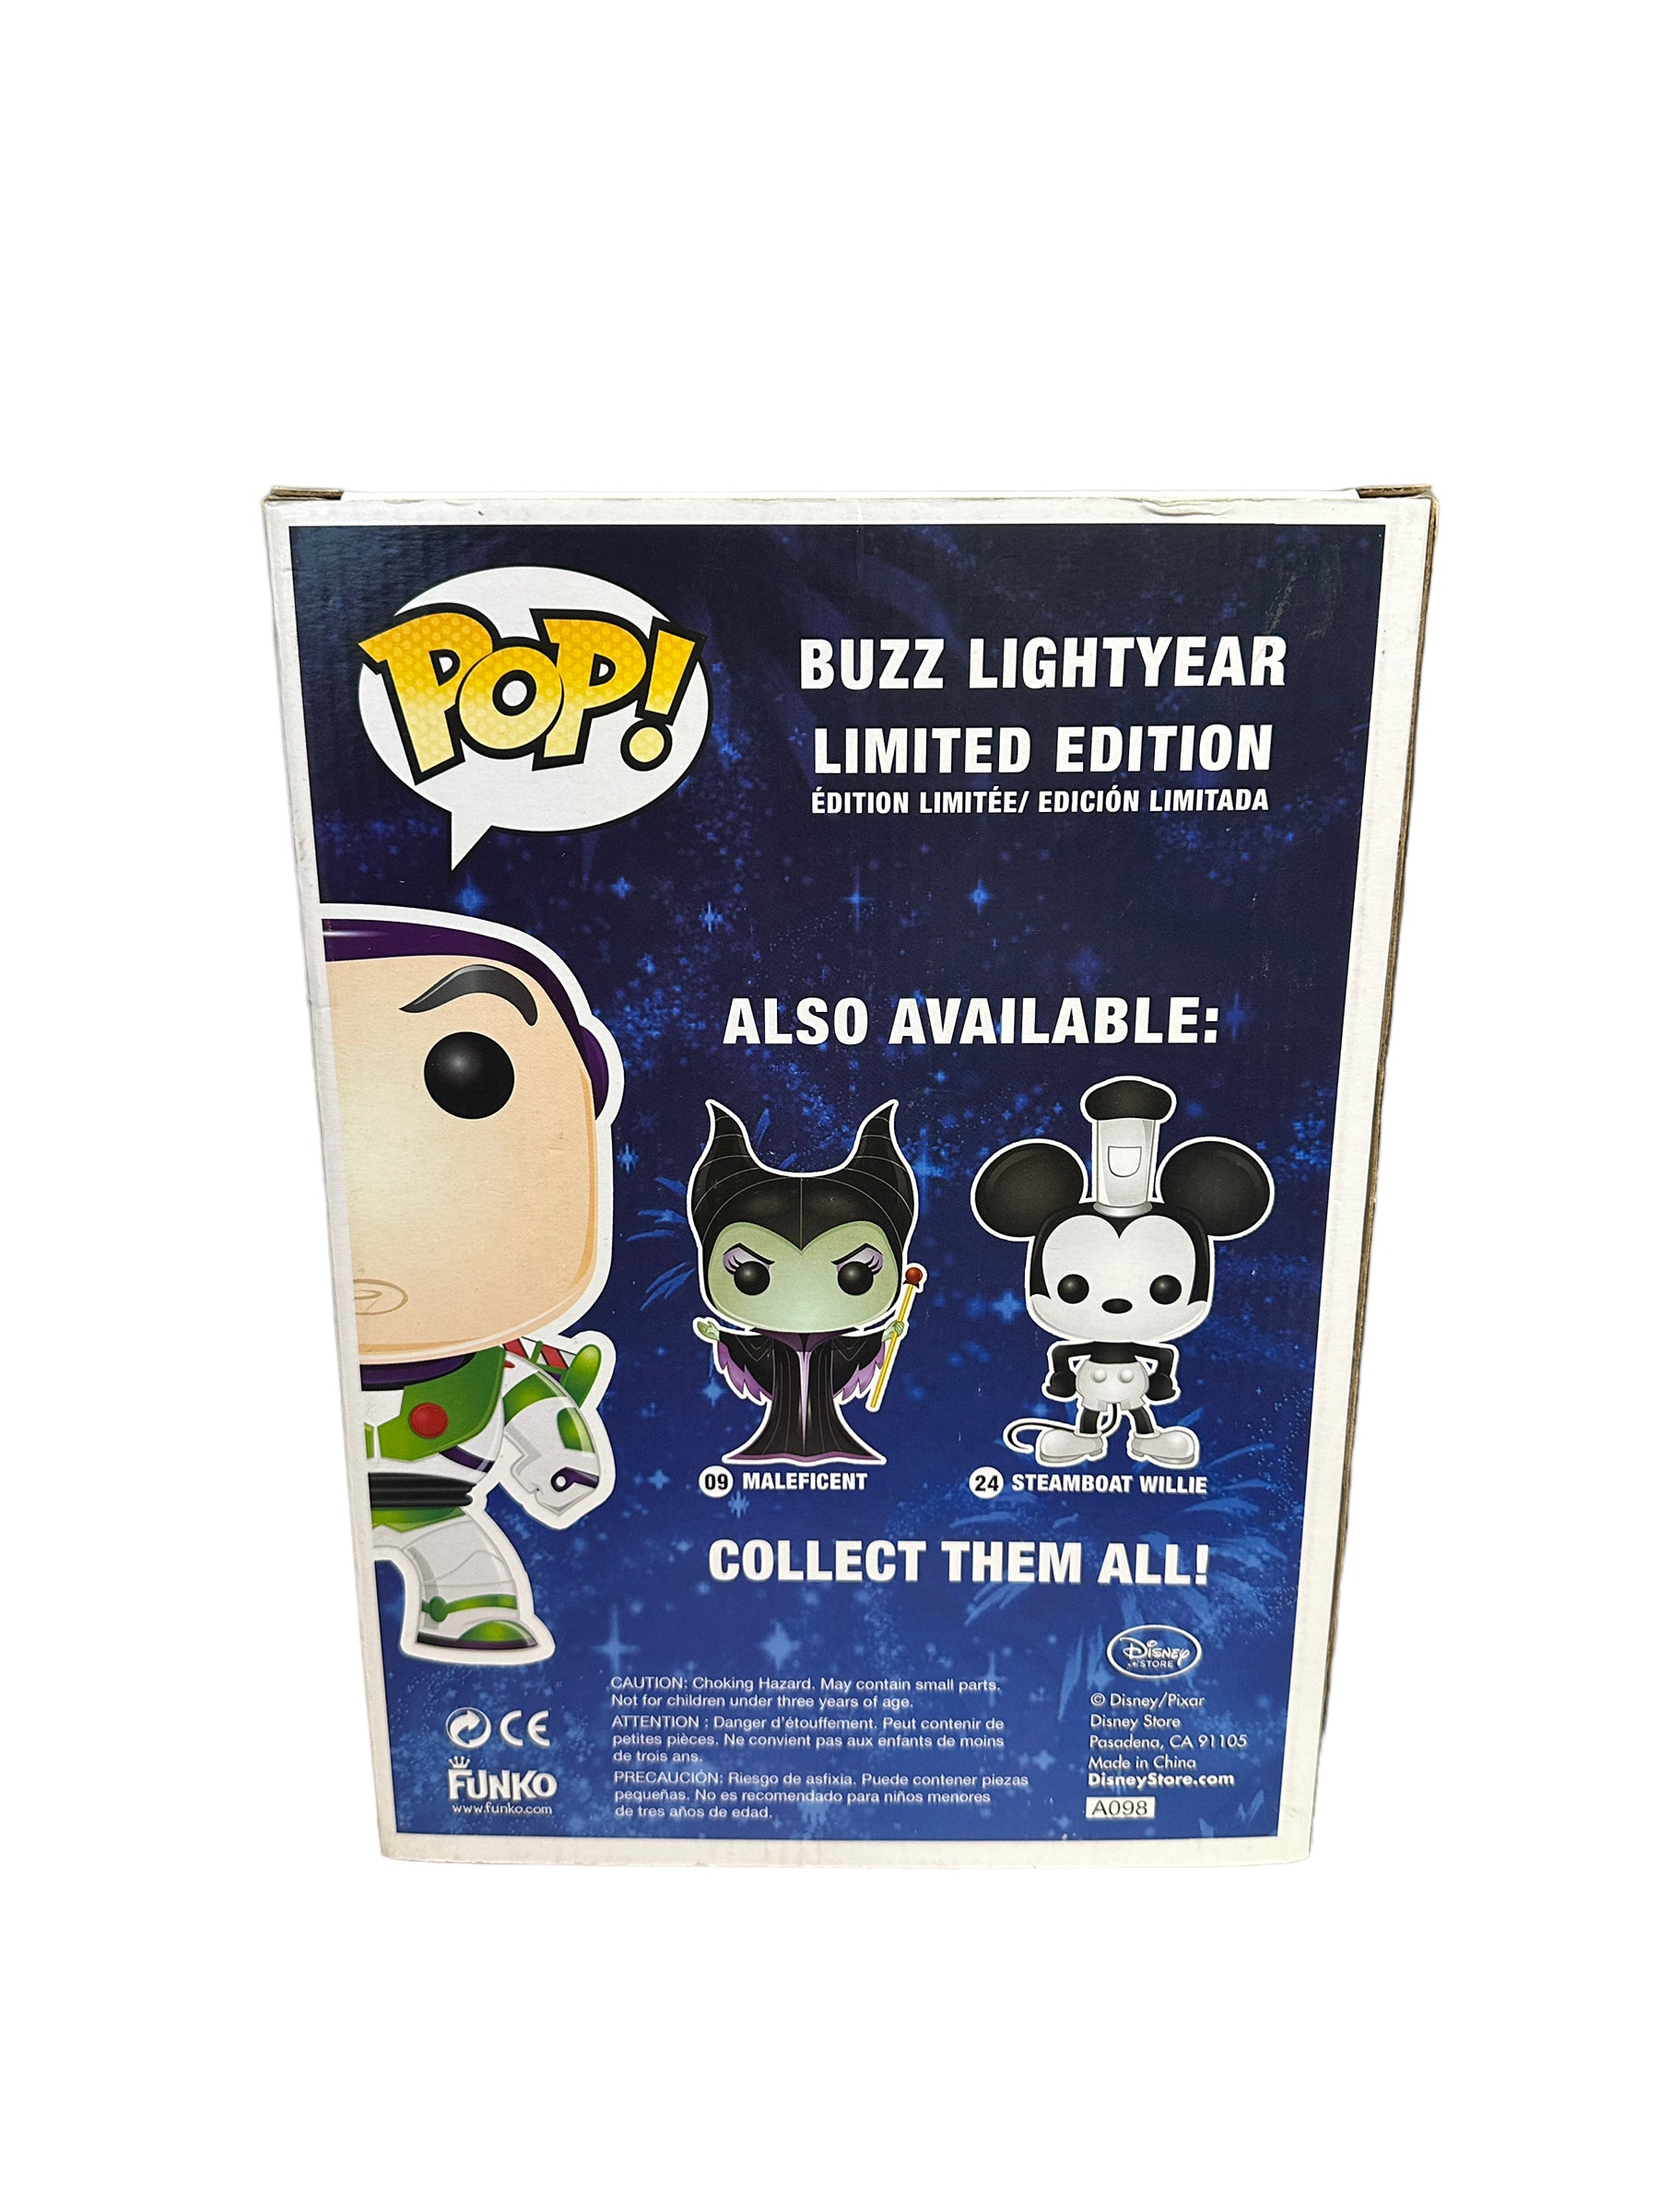 Buzz Lightyear #02 (Metallic) 9" Funko Pop! - Disney - SDCC Disney Store 2011 Exclusive LE360 Pcs - Condition 8/10